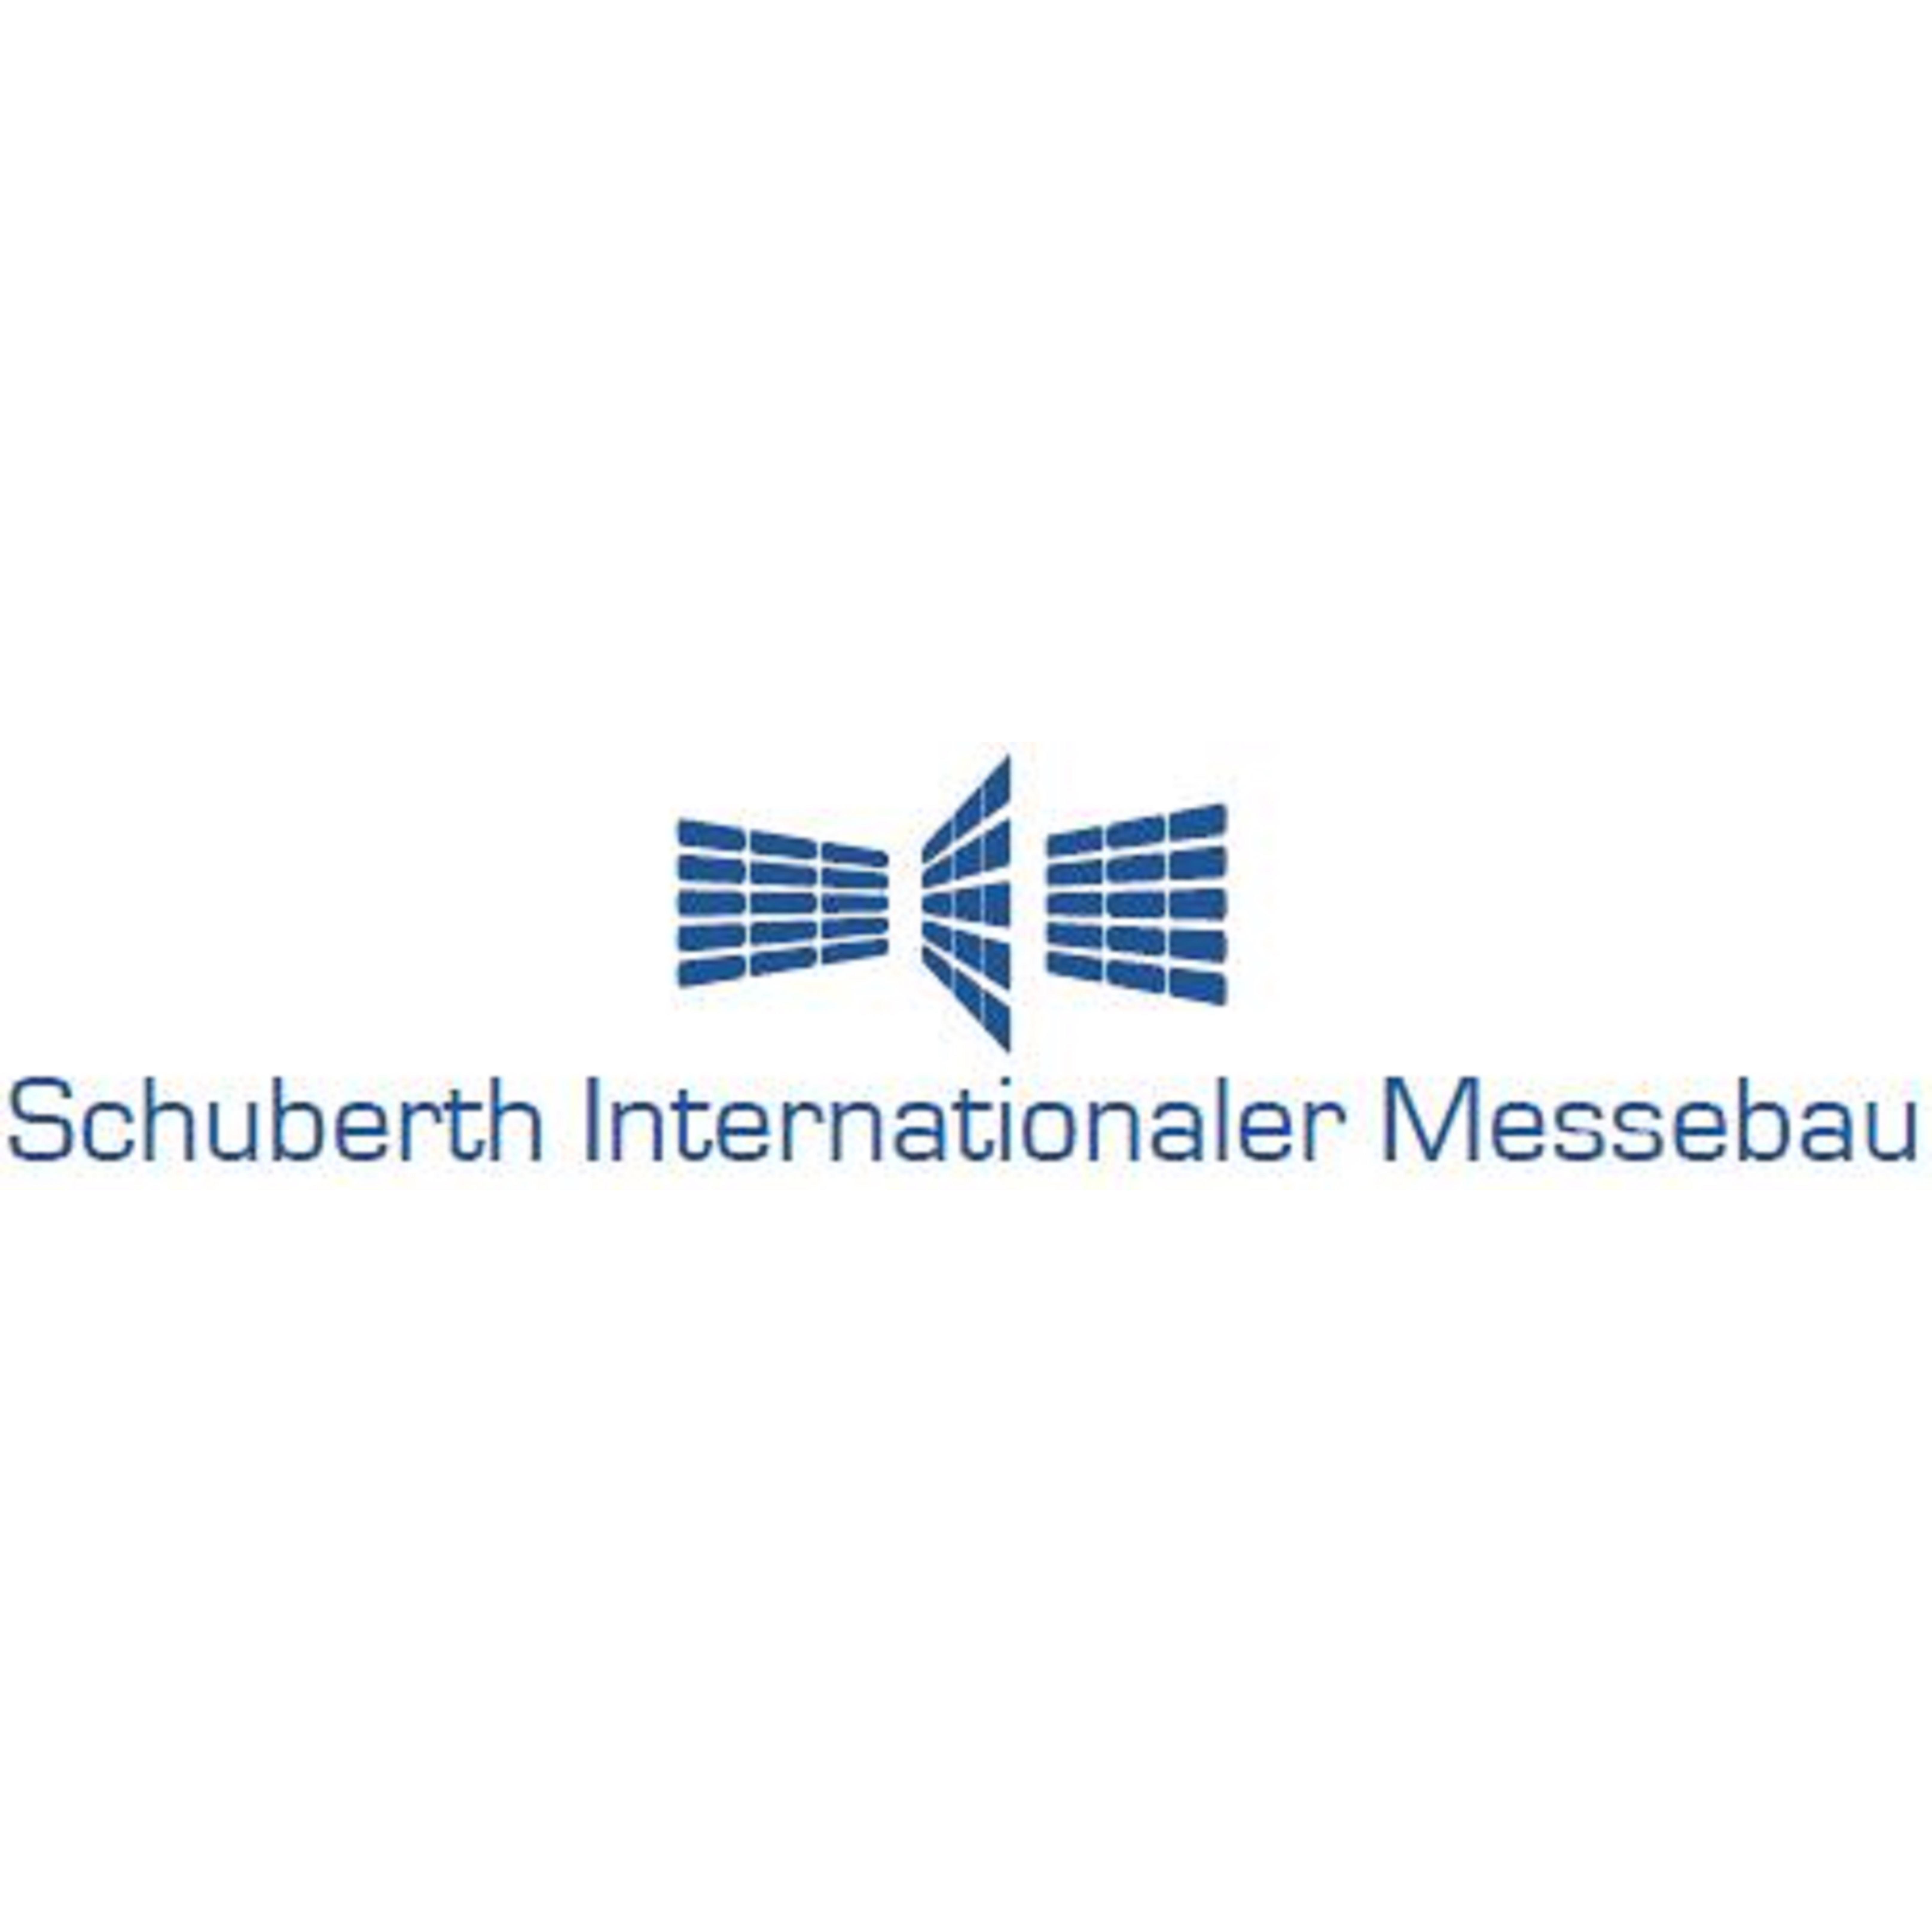 Schuberth Internationaler Messebau in Berlin - Logo